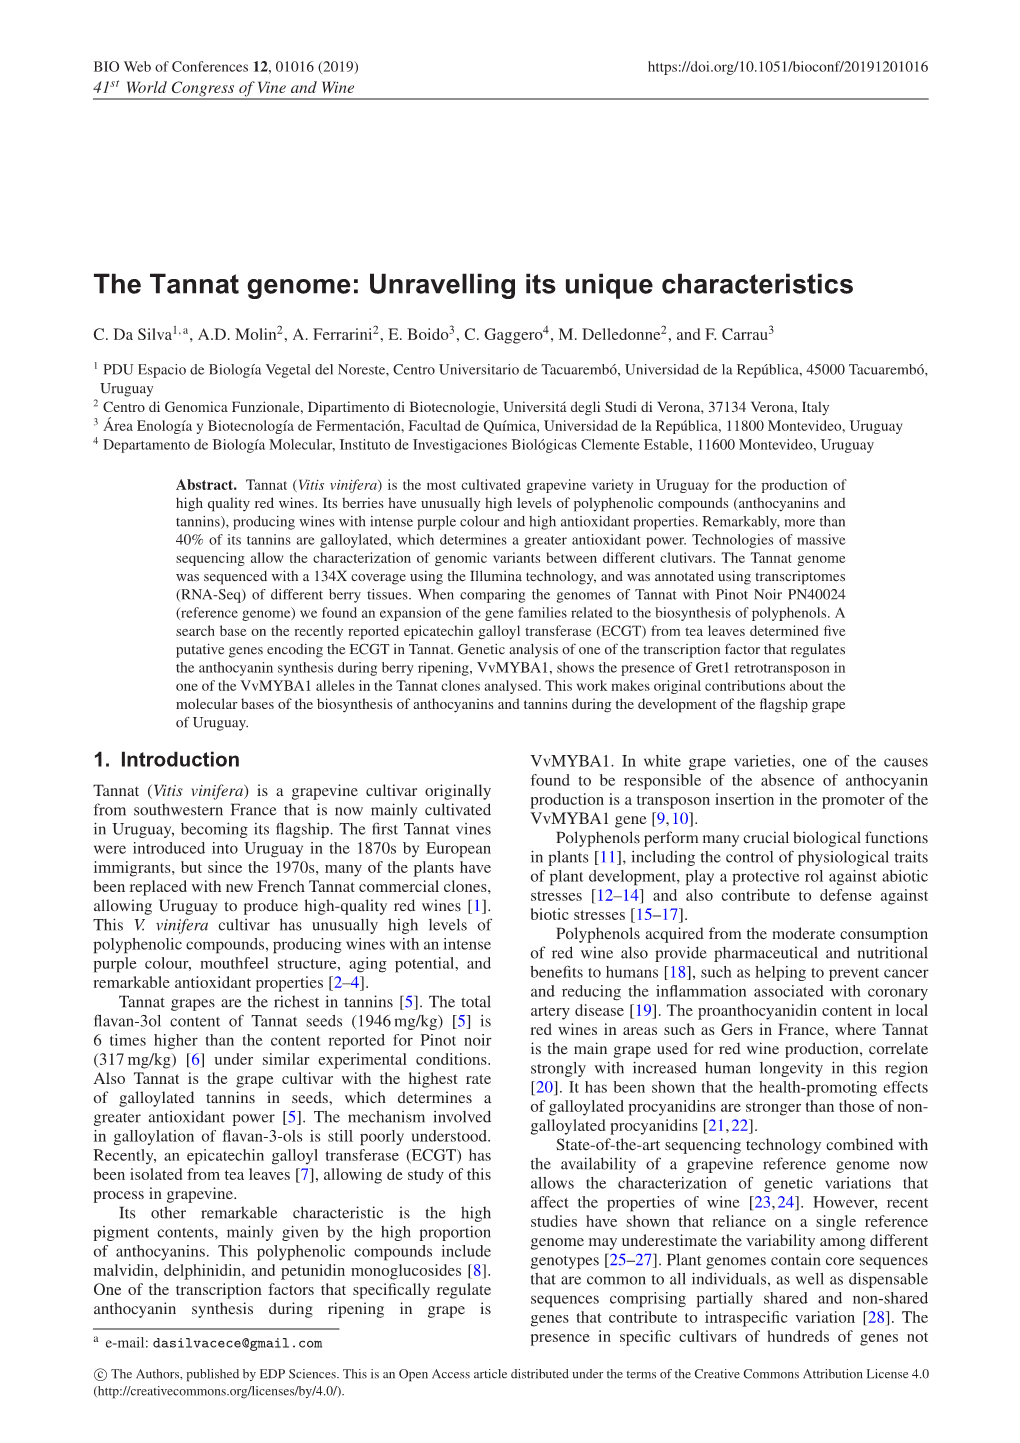 The Tannat Genome: Unravelling Its Unique Characteristics